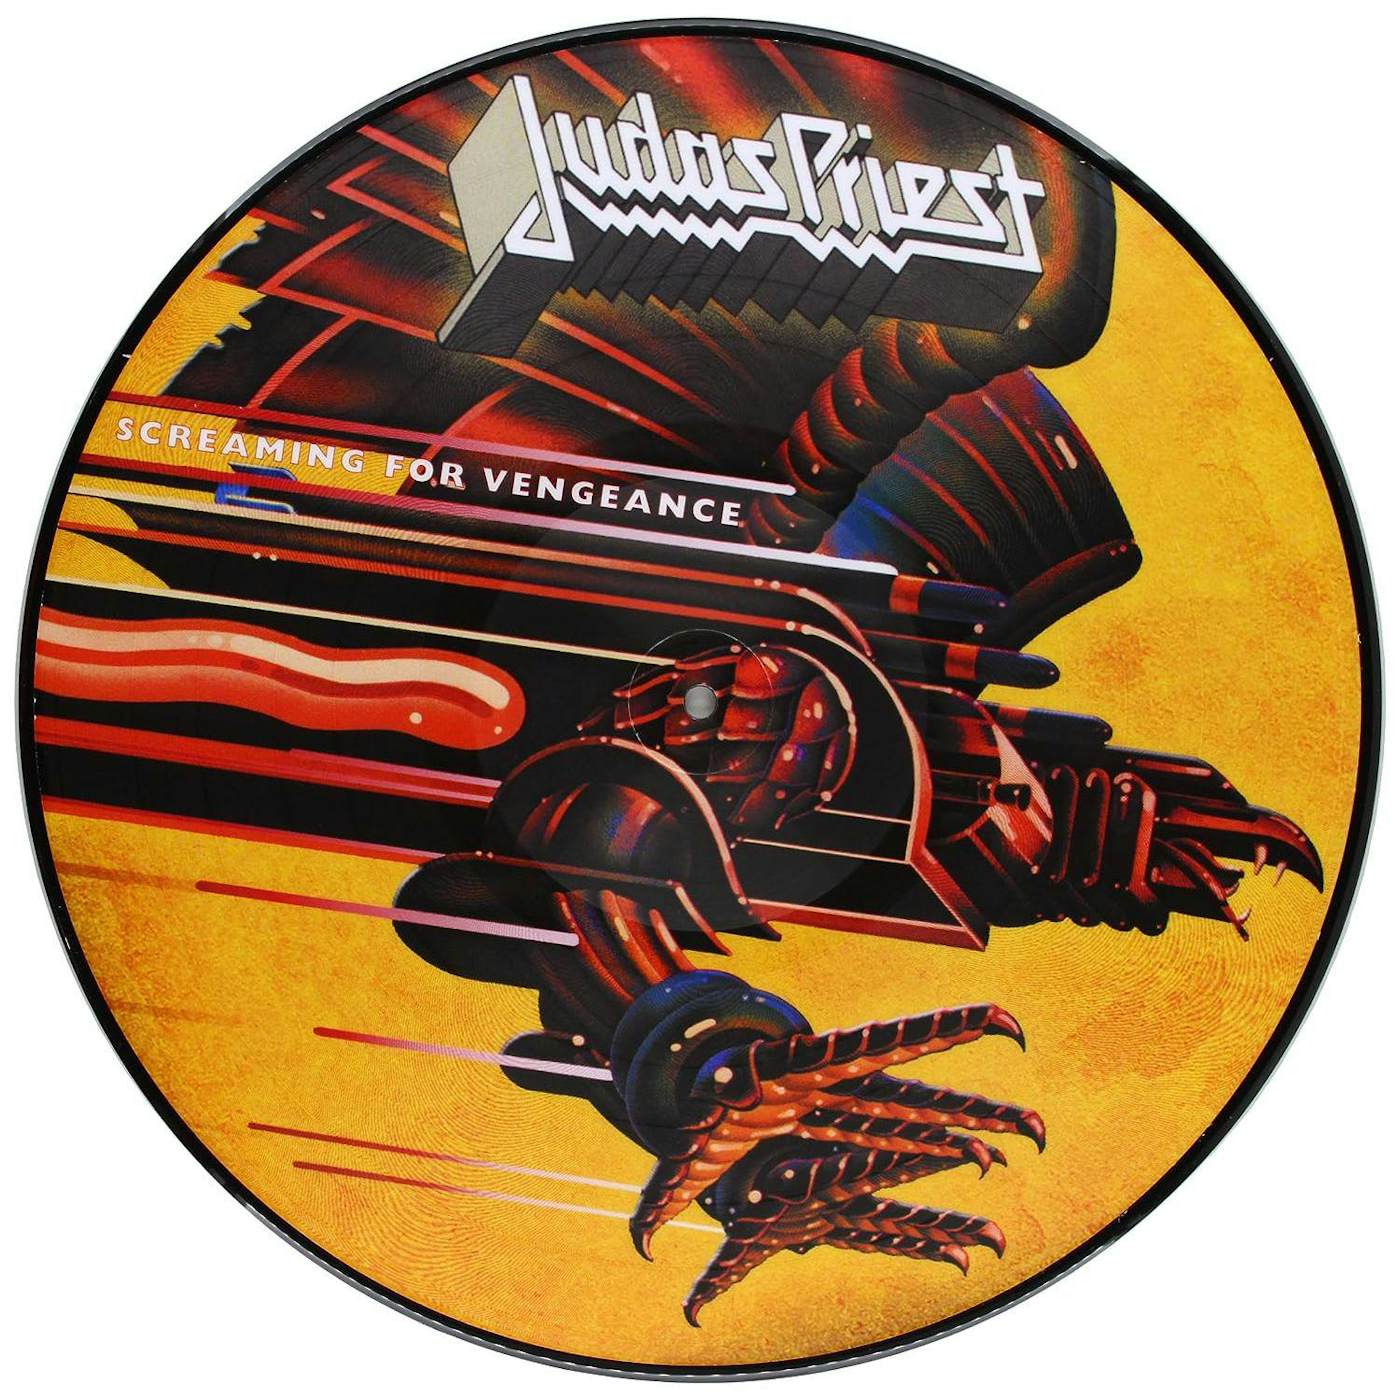 Judas Priest Screaming For Vengeance (Picture Disc) Vinyl Record